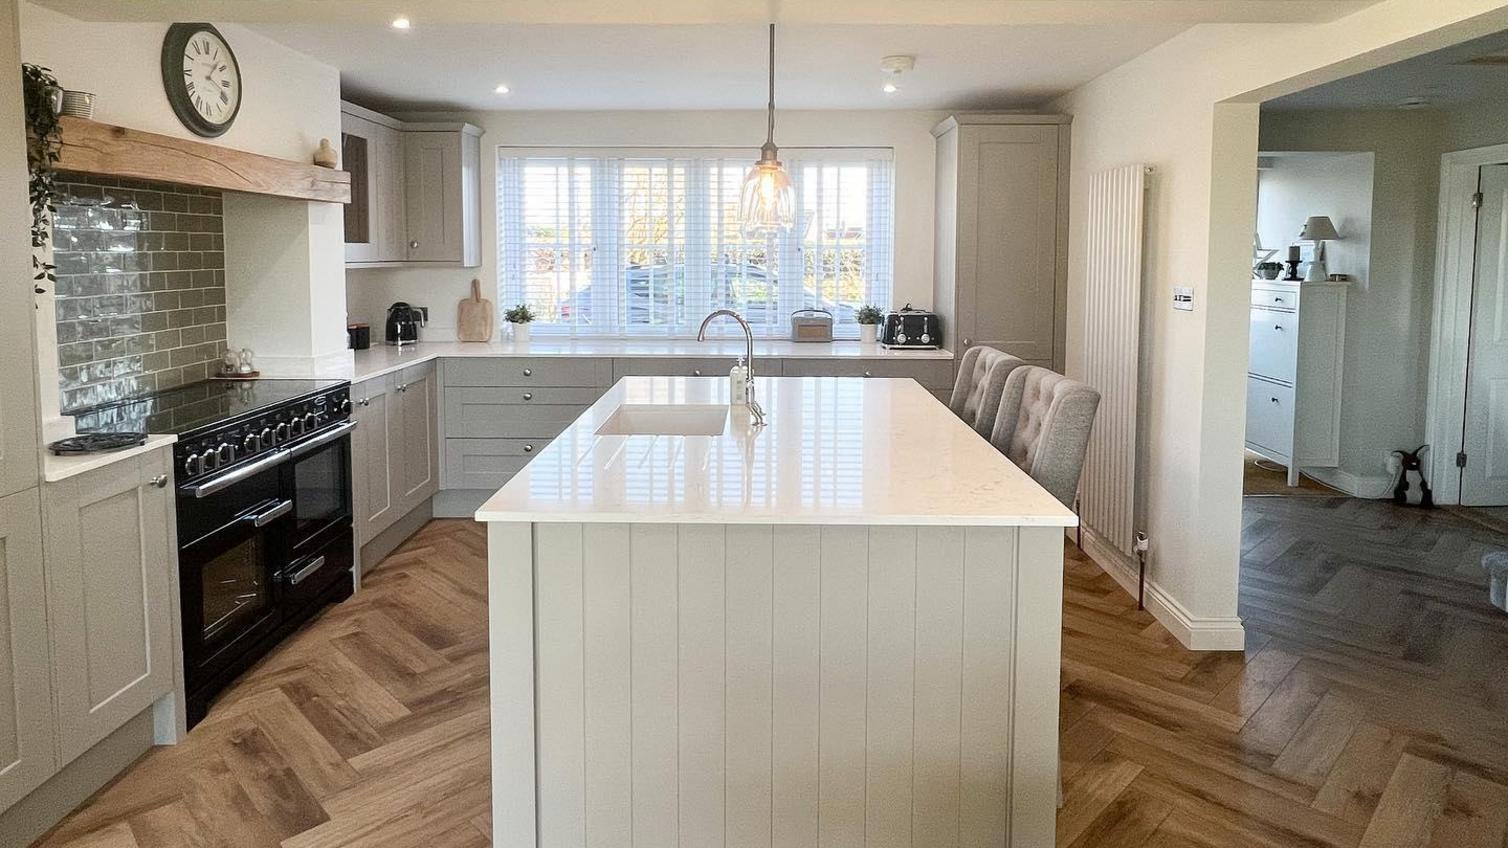 Fairford pebble open plan kitchen, with herringbone luxury vinyl flooring between kitchen and living room areas.